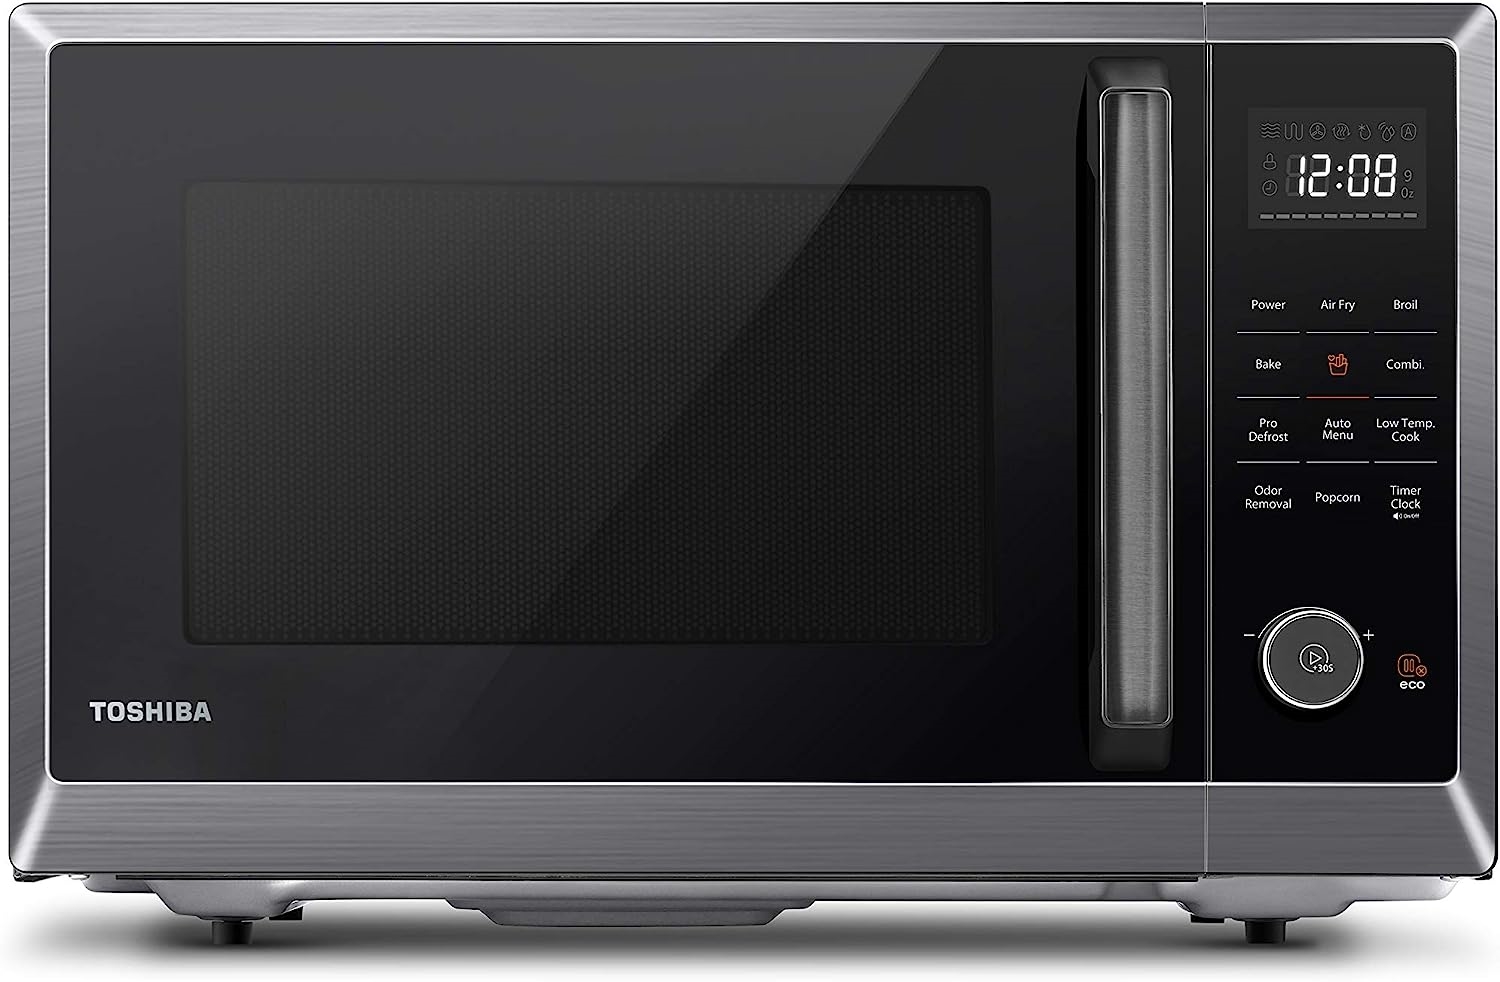  TOSHIBA Microwave Toaster Oven Combo | DeviceDaily.com